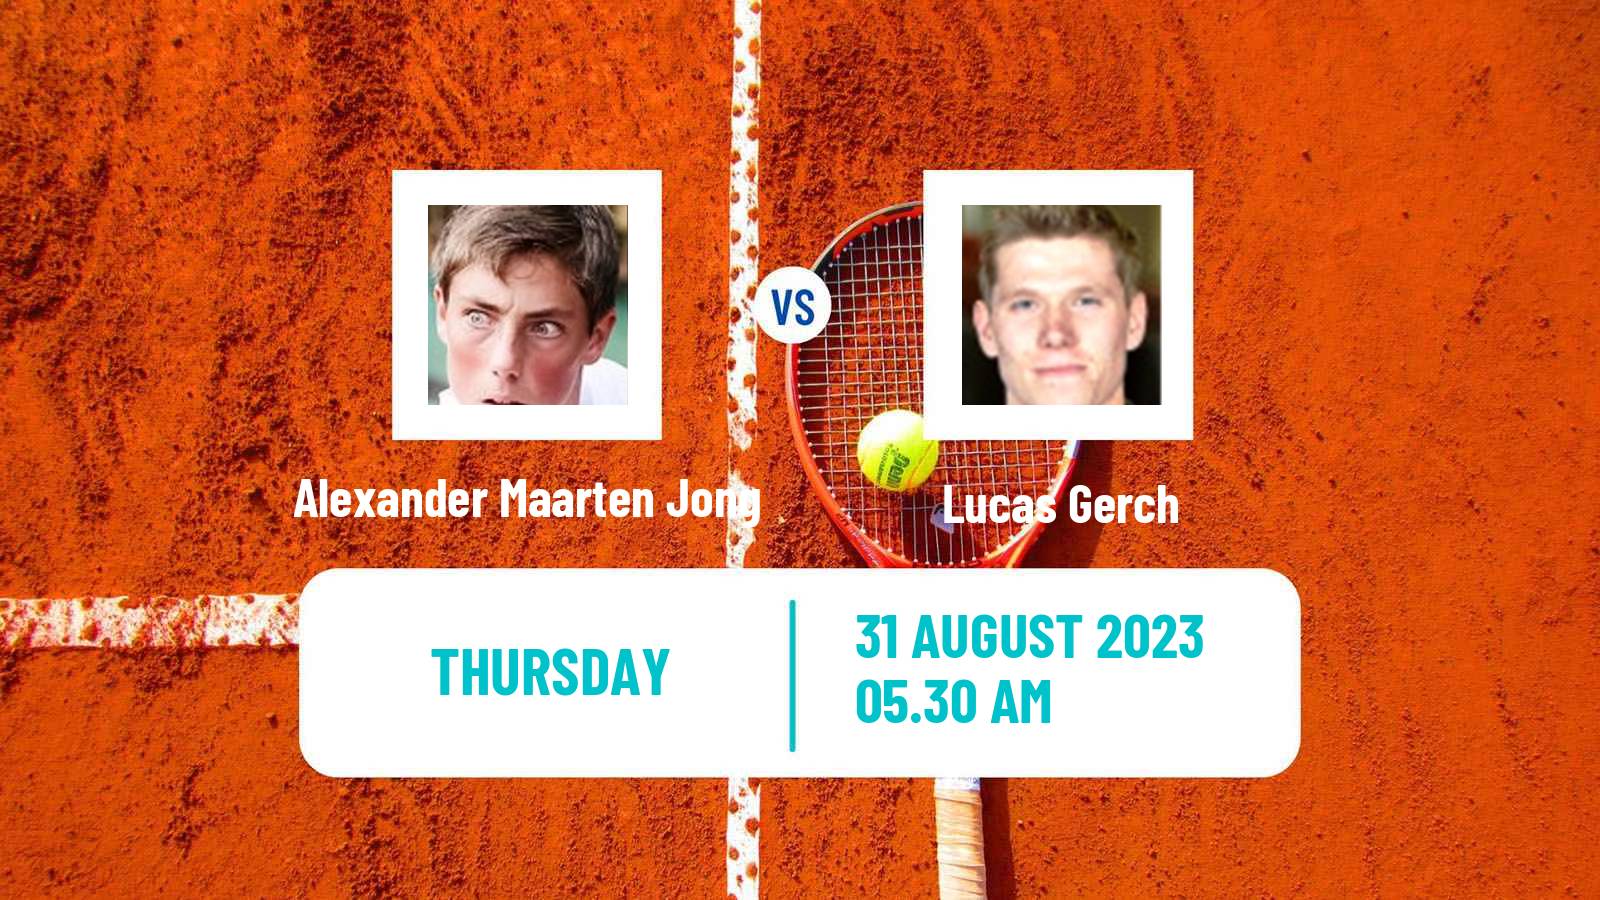 Tennis ITF M25 Oldenzaal Men Alexander Maarten Jong - Lucas Gerch